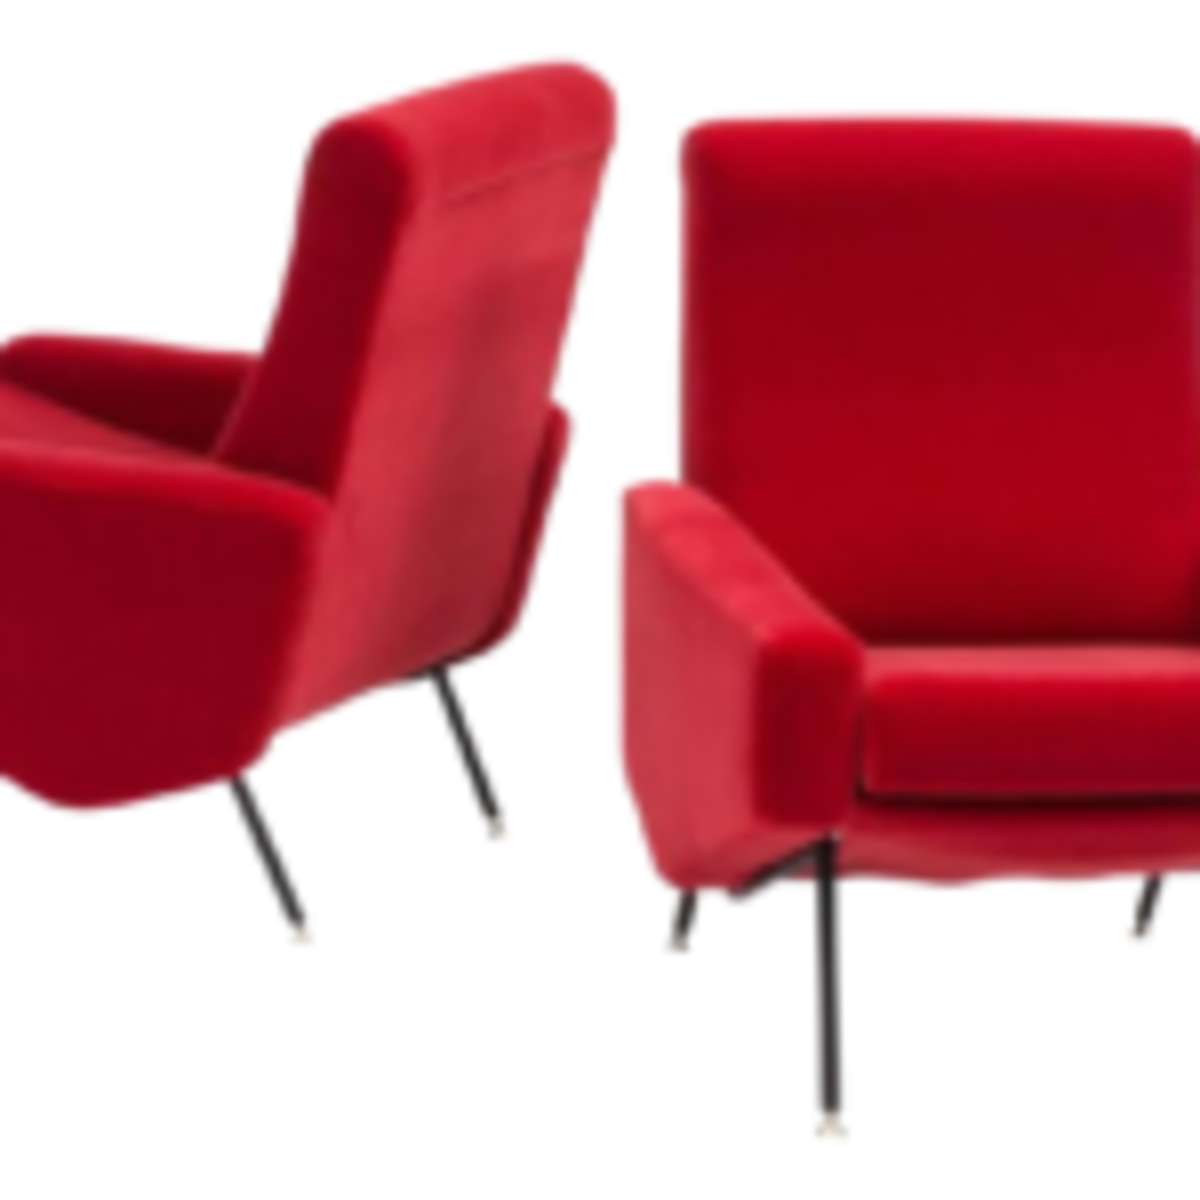 Troika lounge chairs